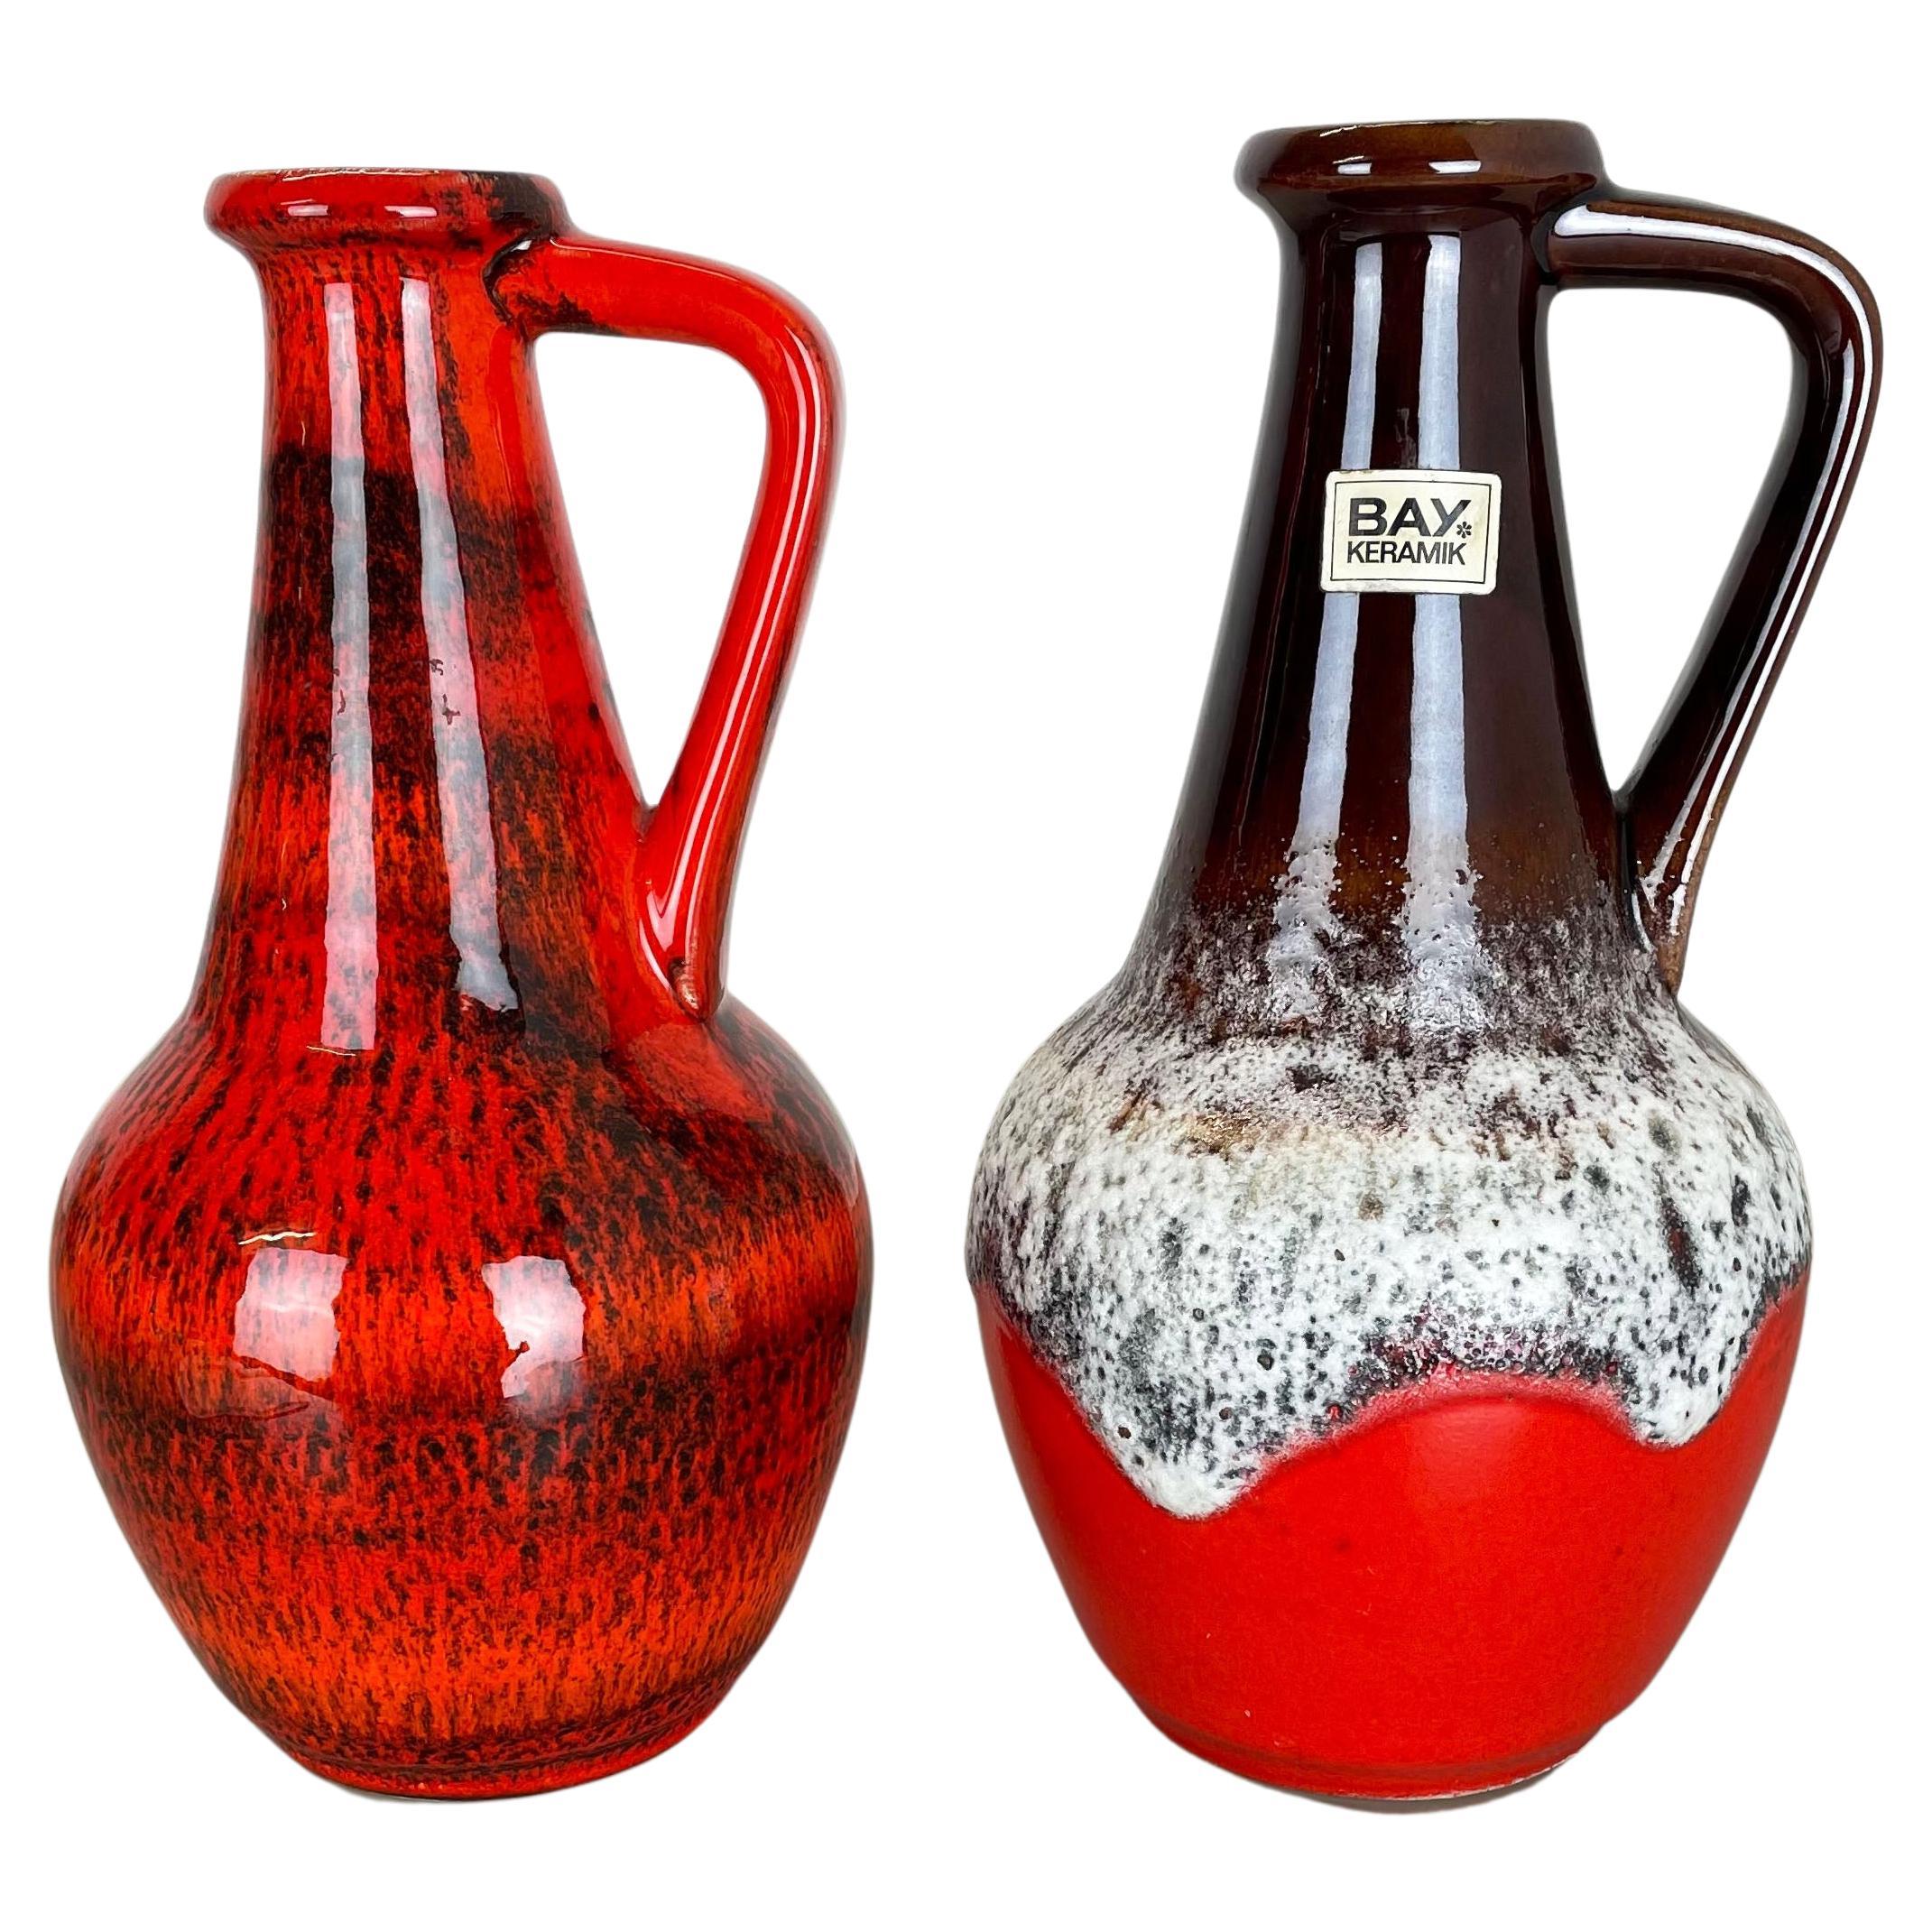 bay keramik 1960's 70's vintage VASE red yellow black lava pattern model 67 30